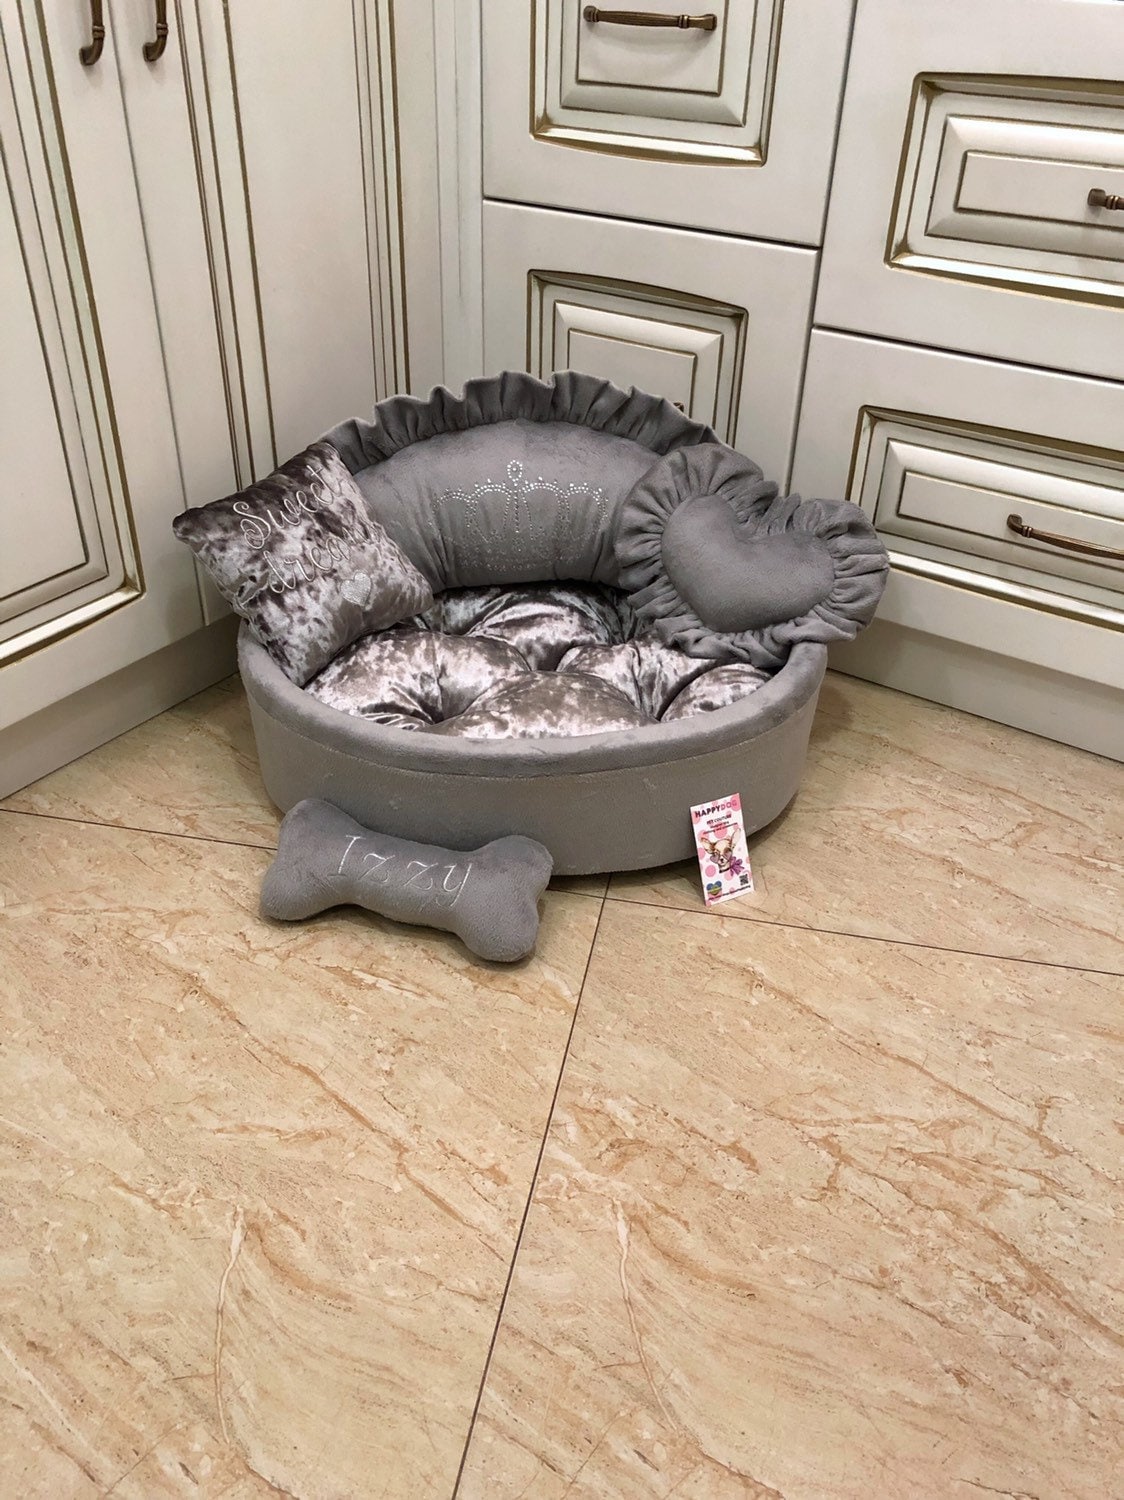 medium size lv dog bed